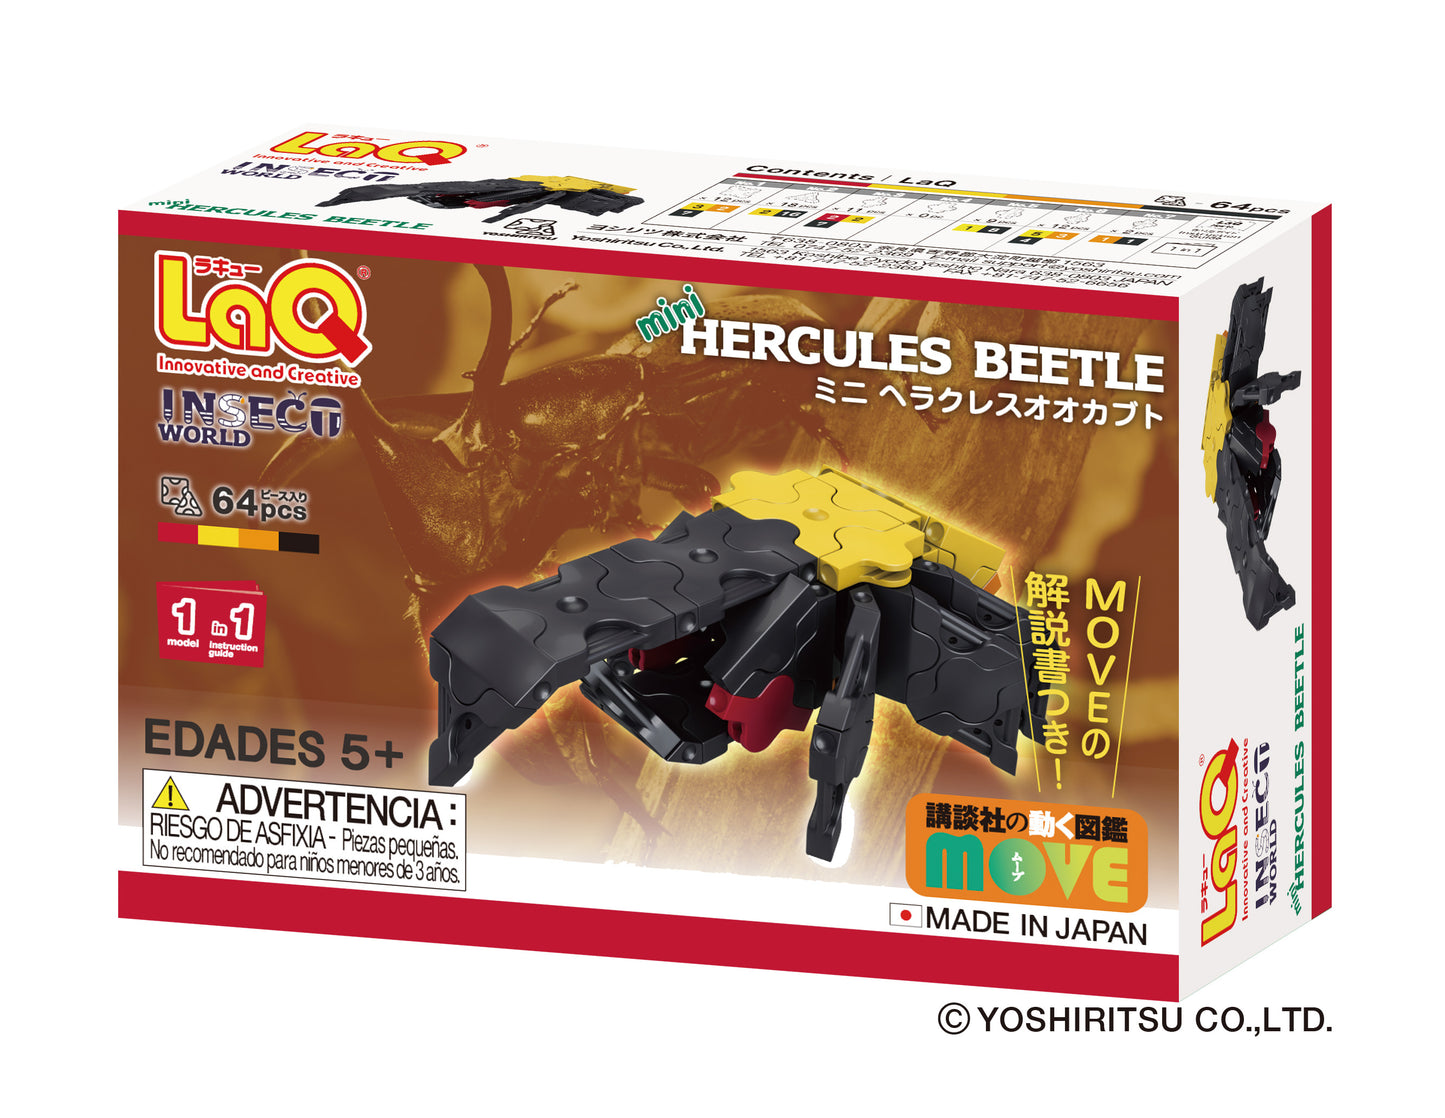 LaQ Insect World Mini Hercules Beetle